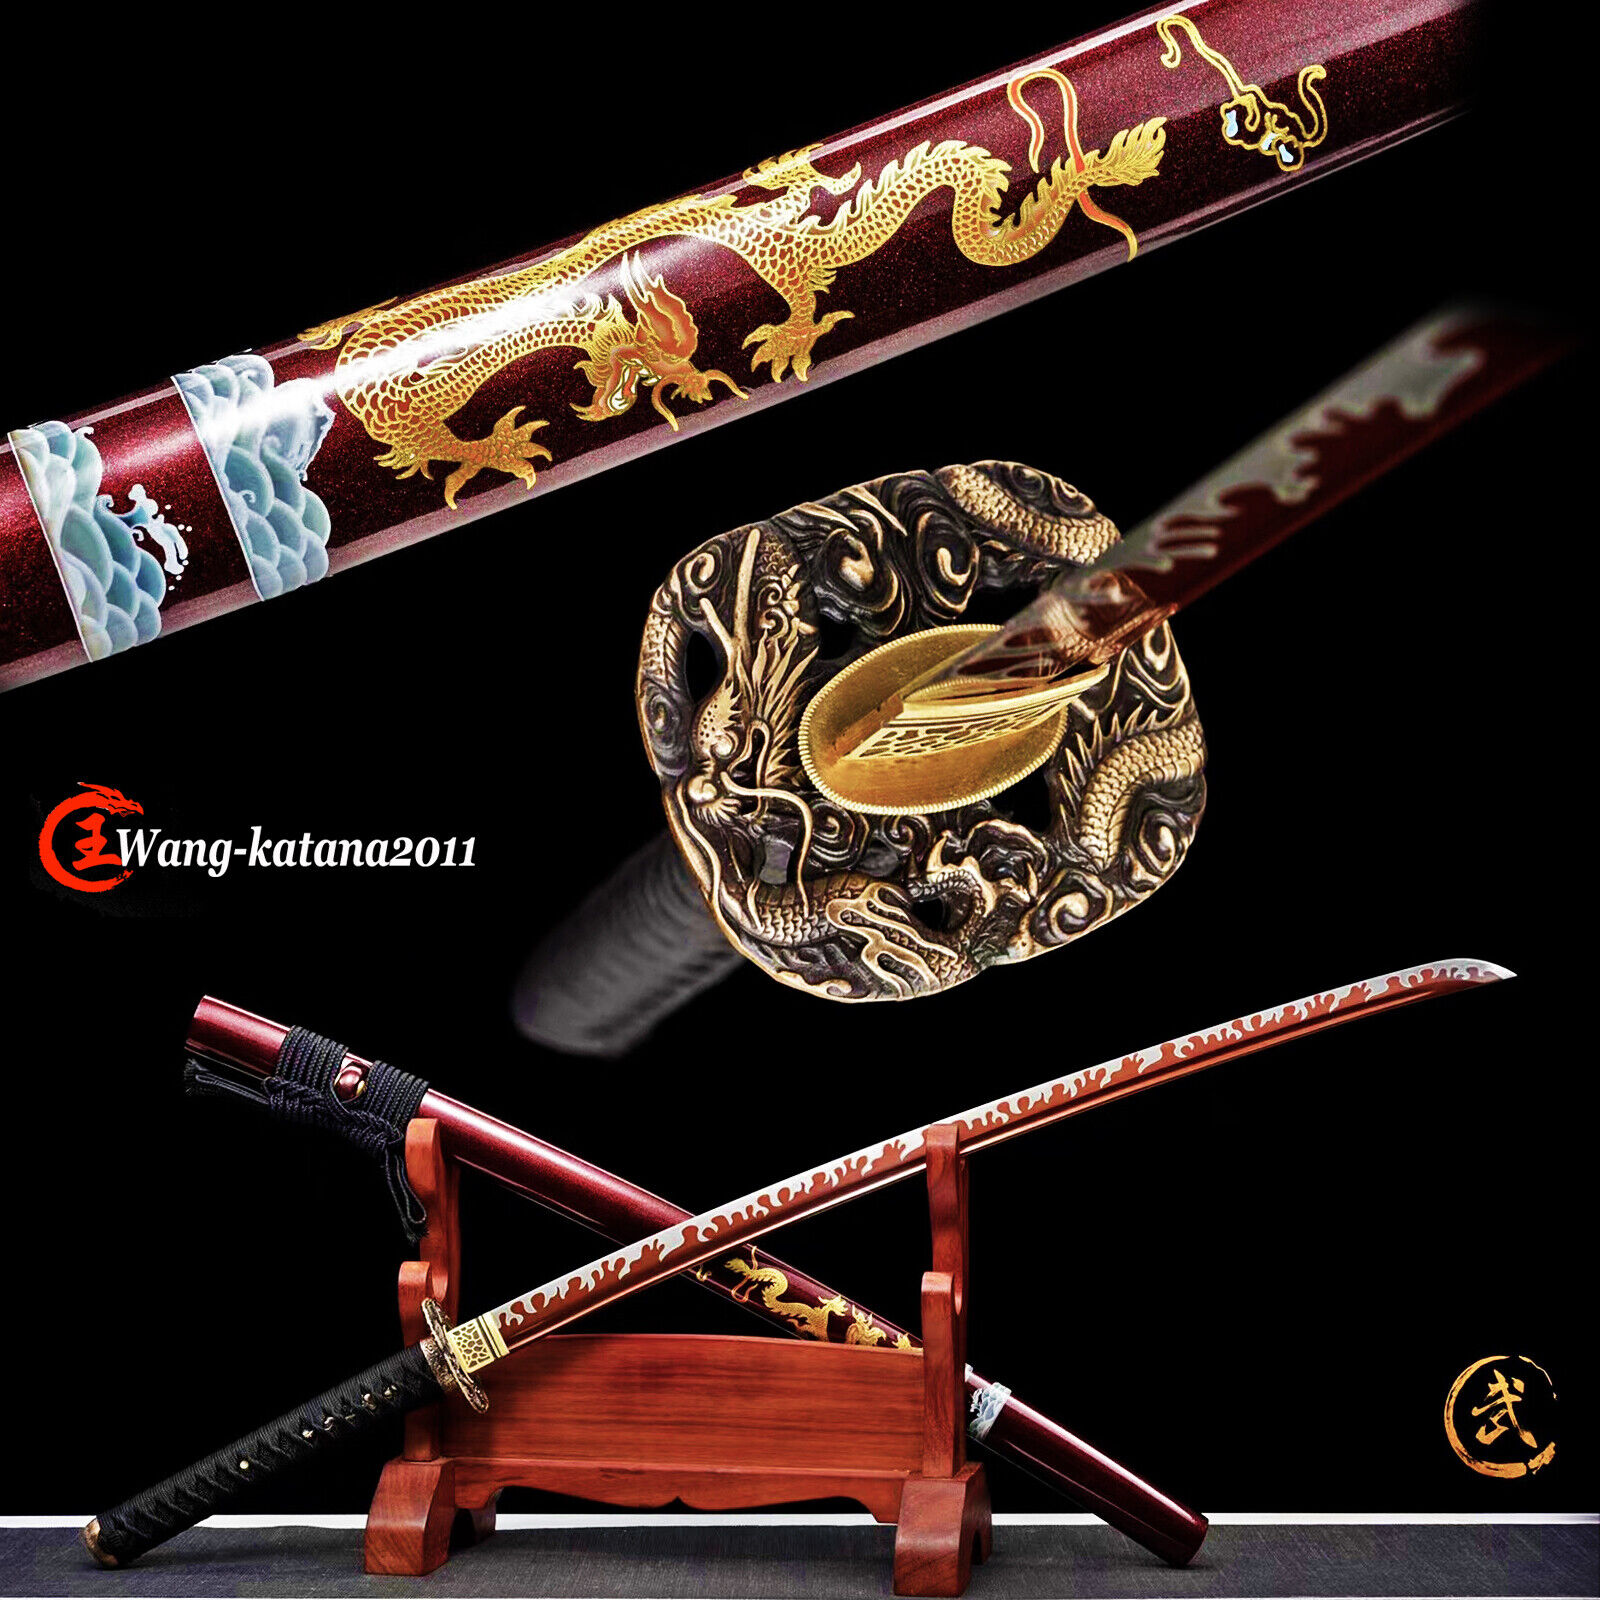 Dark Red Dragon Katana 1095 Carbon Steel Battle Ready Japanese Samurai Sword New